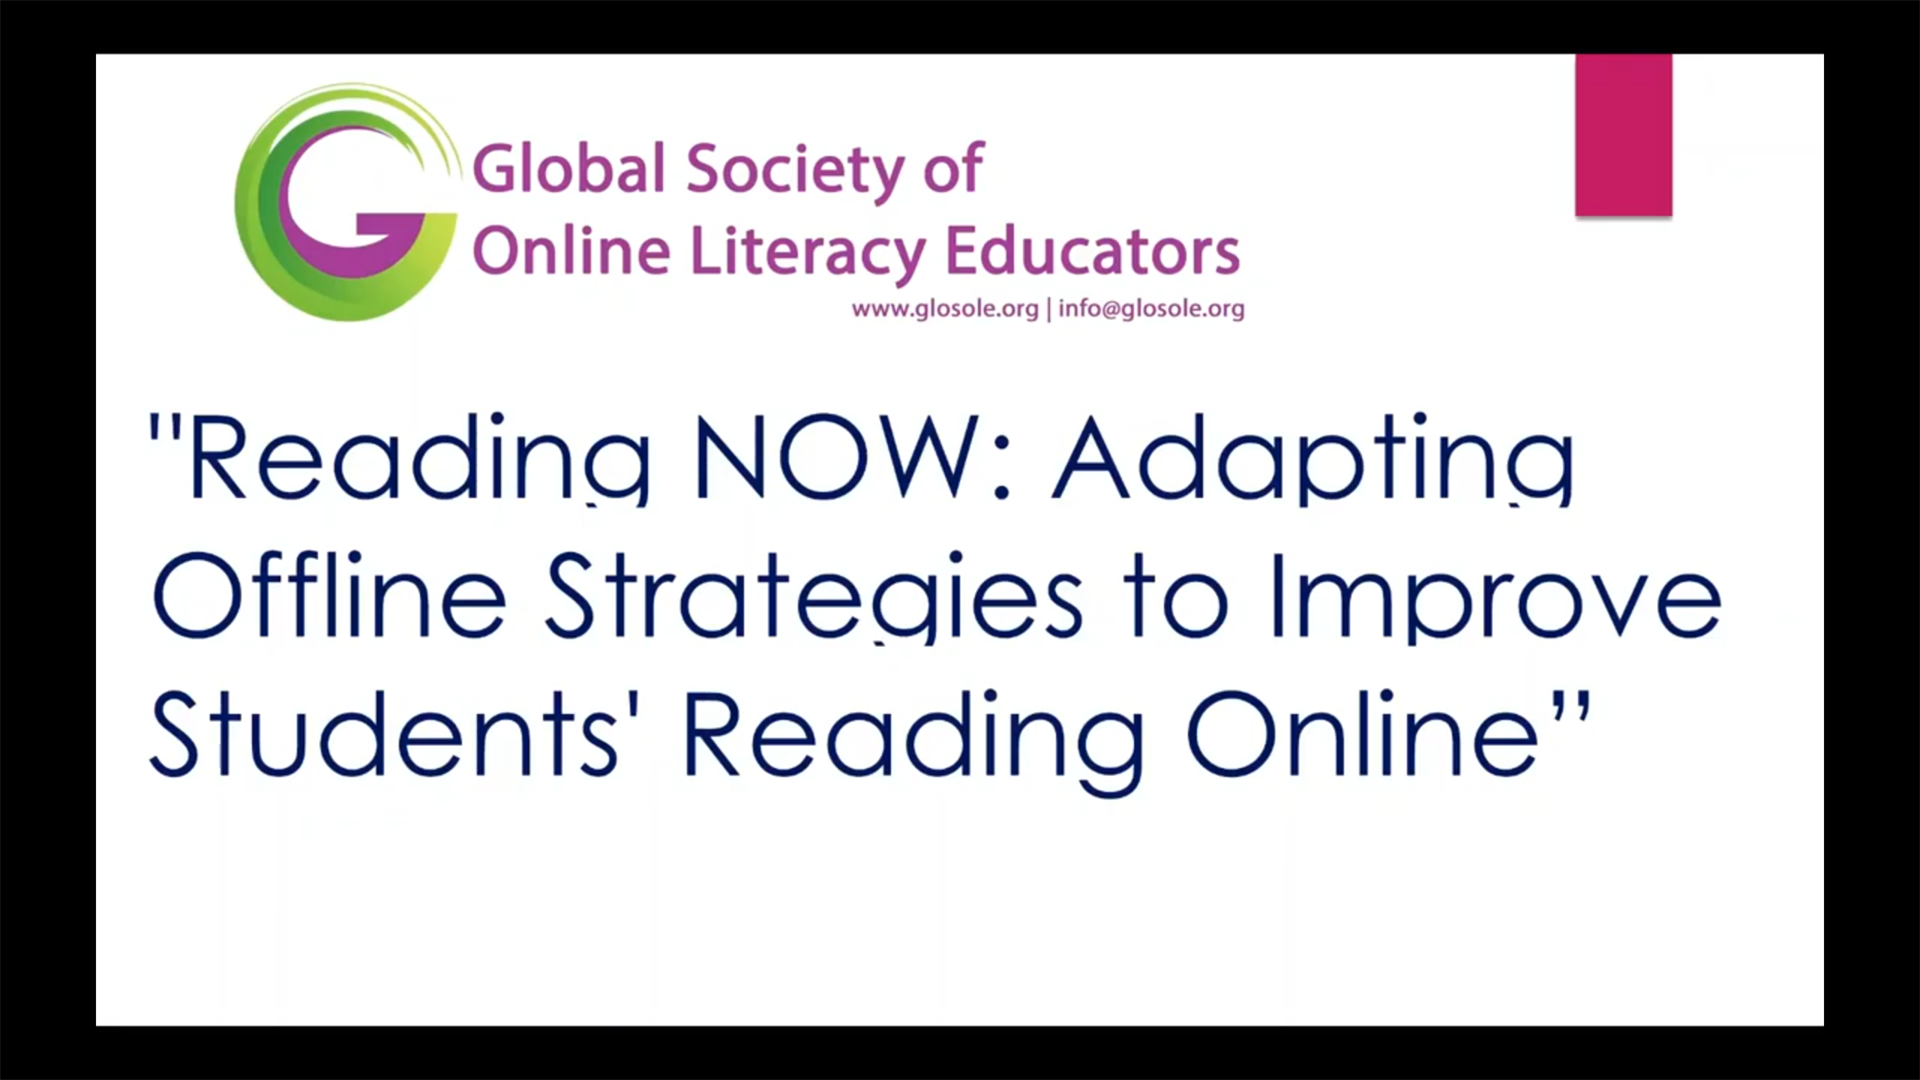 Webinar Screen Capture: Slide title "Global Society of Online Literacy Educators. Reading Now: Adapting Offline Strategies to Improve Students' Readings Online"